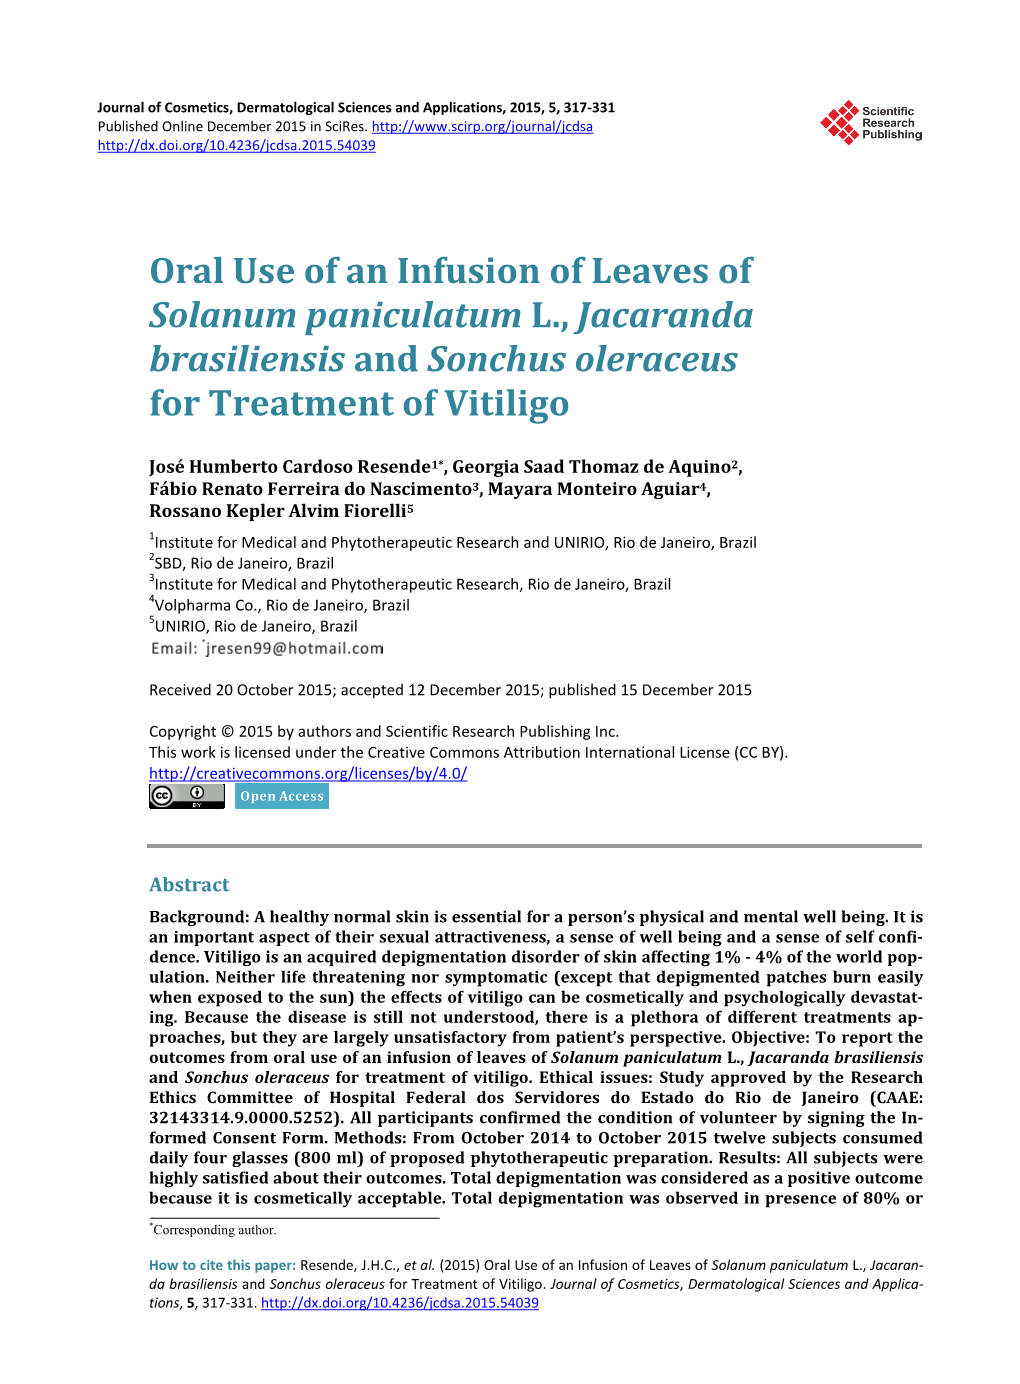 Oral Use of an Infusion of Leaves of Solanum Paniculatum L., Jacaranda Brasiliensis and Sonchus Oleraceus for Treatment of Vitiligo